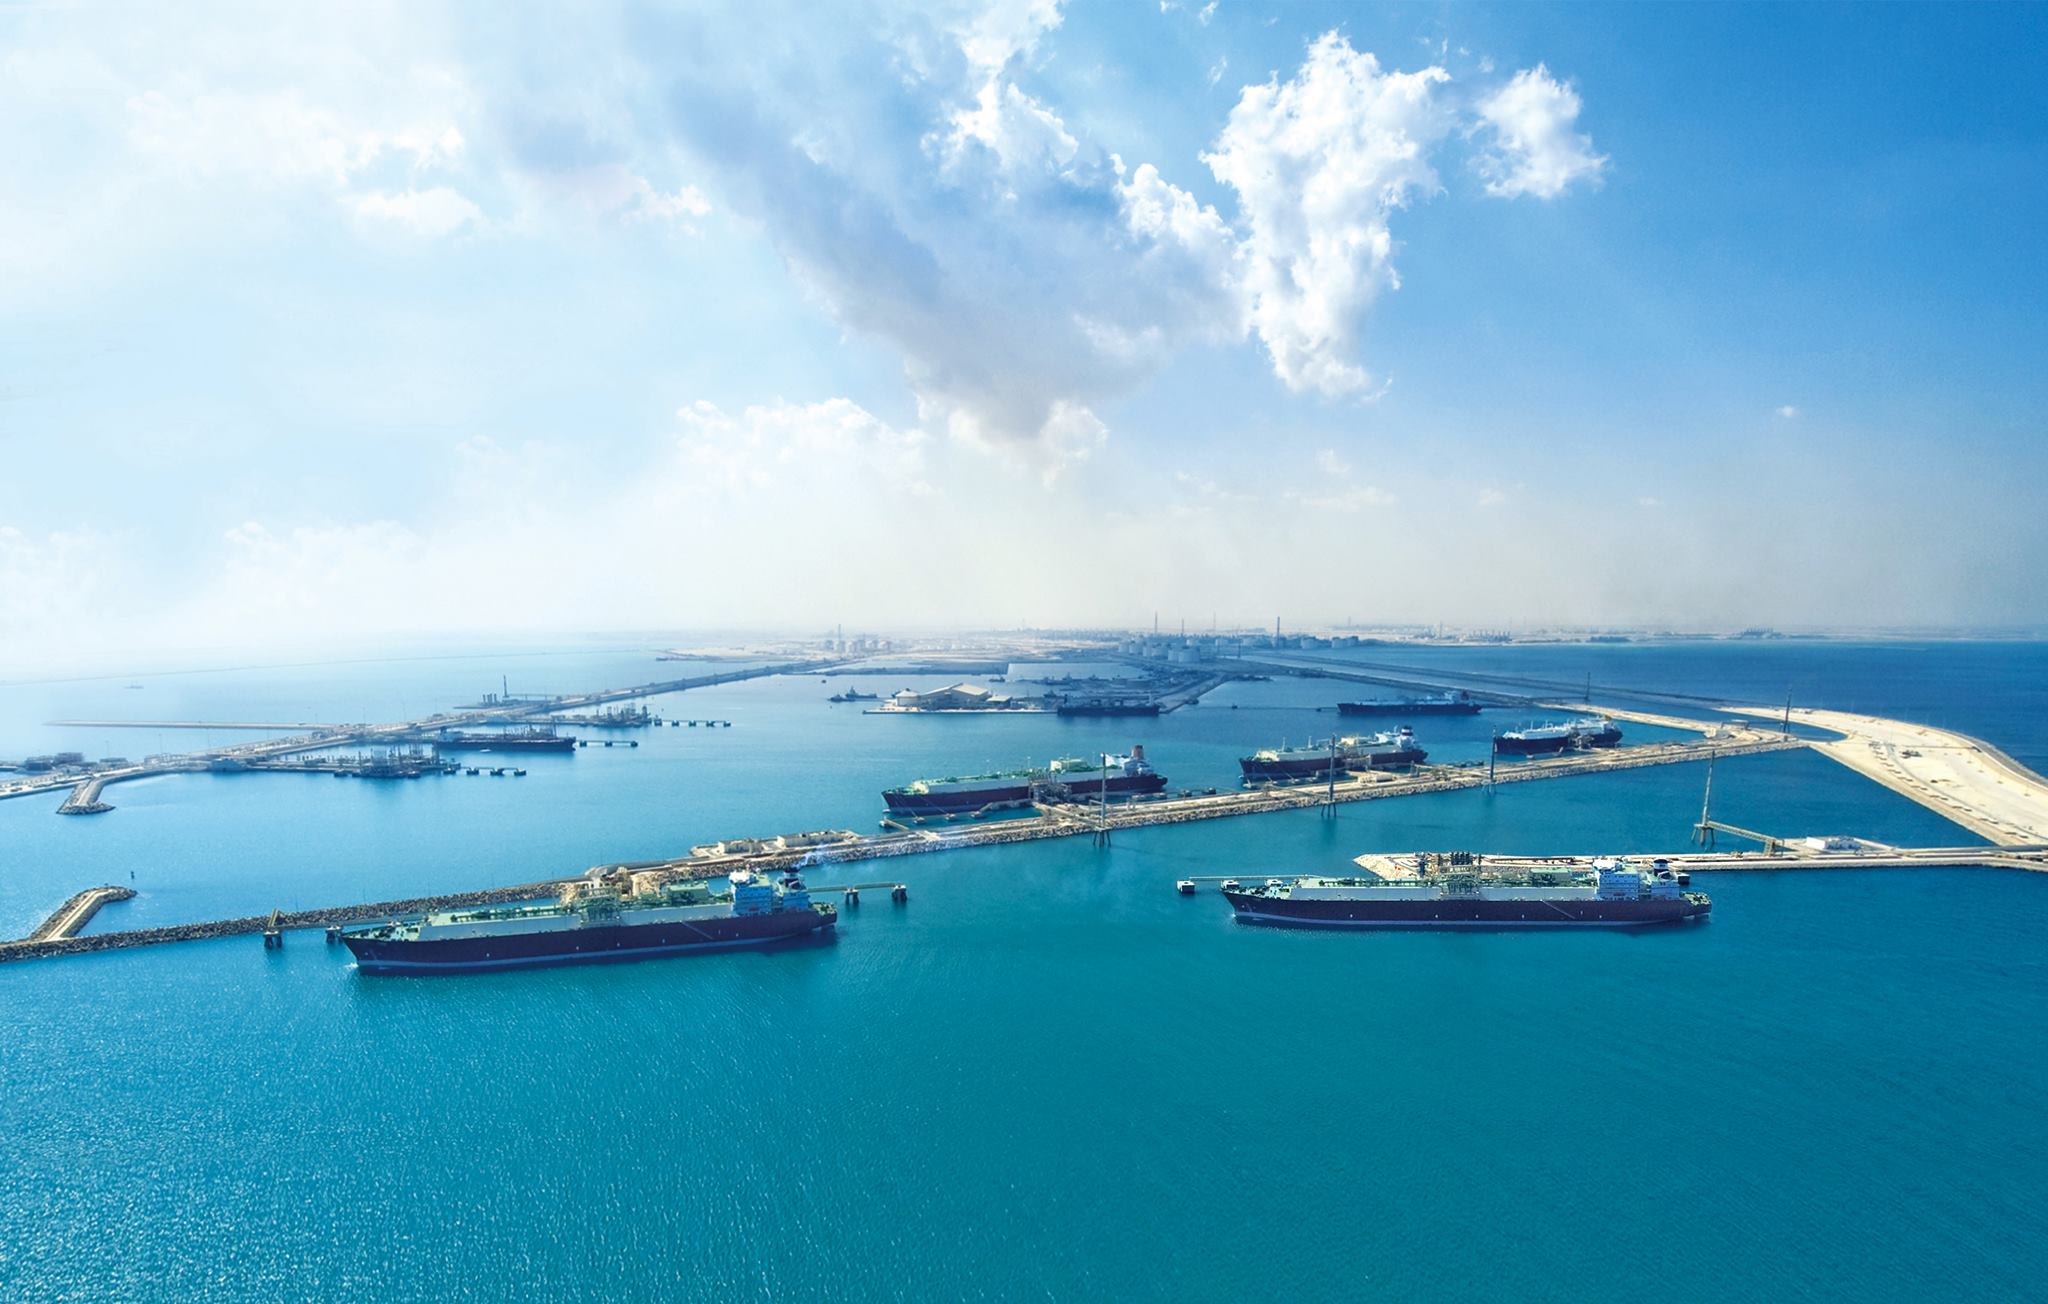 Qatar Petroleum plans emissions cuts by 2030